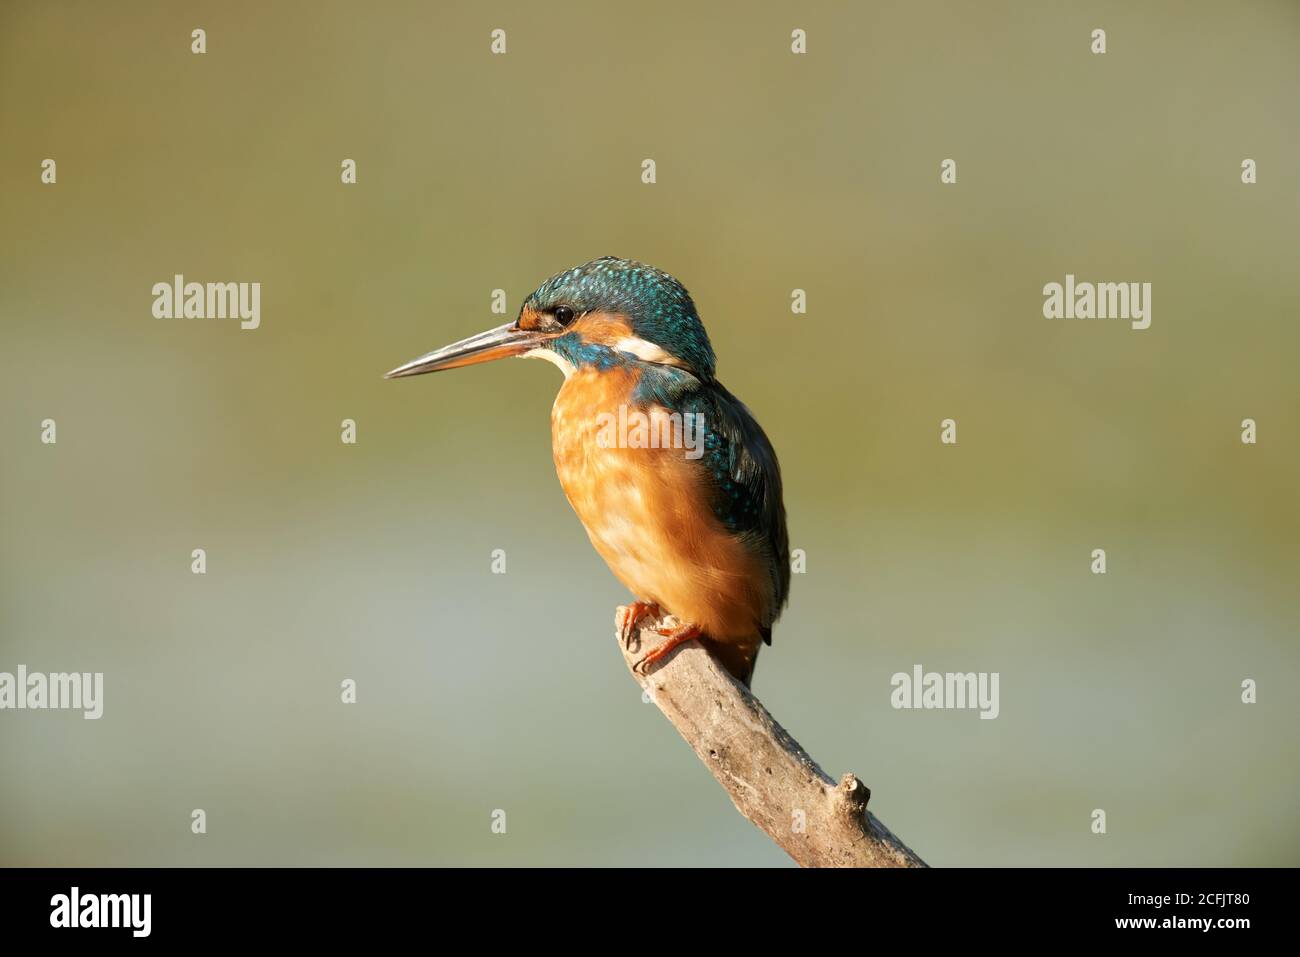 Kingfisher waiting sun a branch in Alviano lake Stock Photo